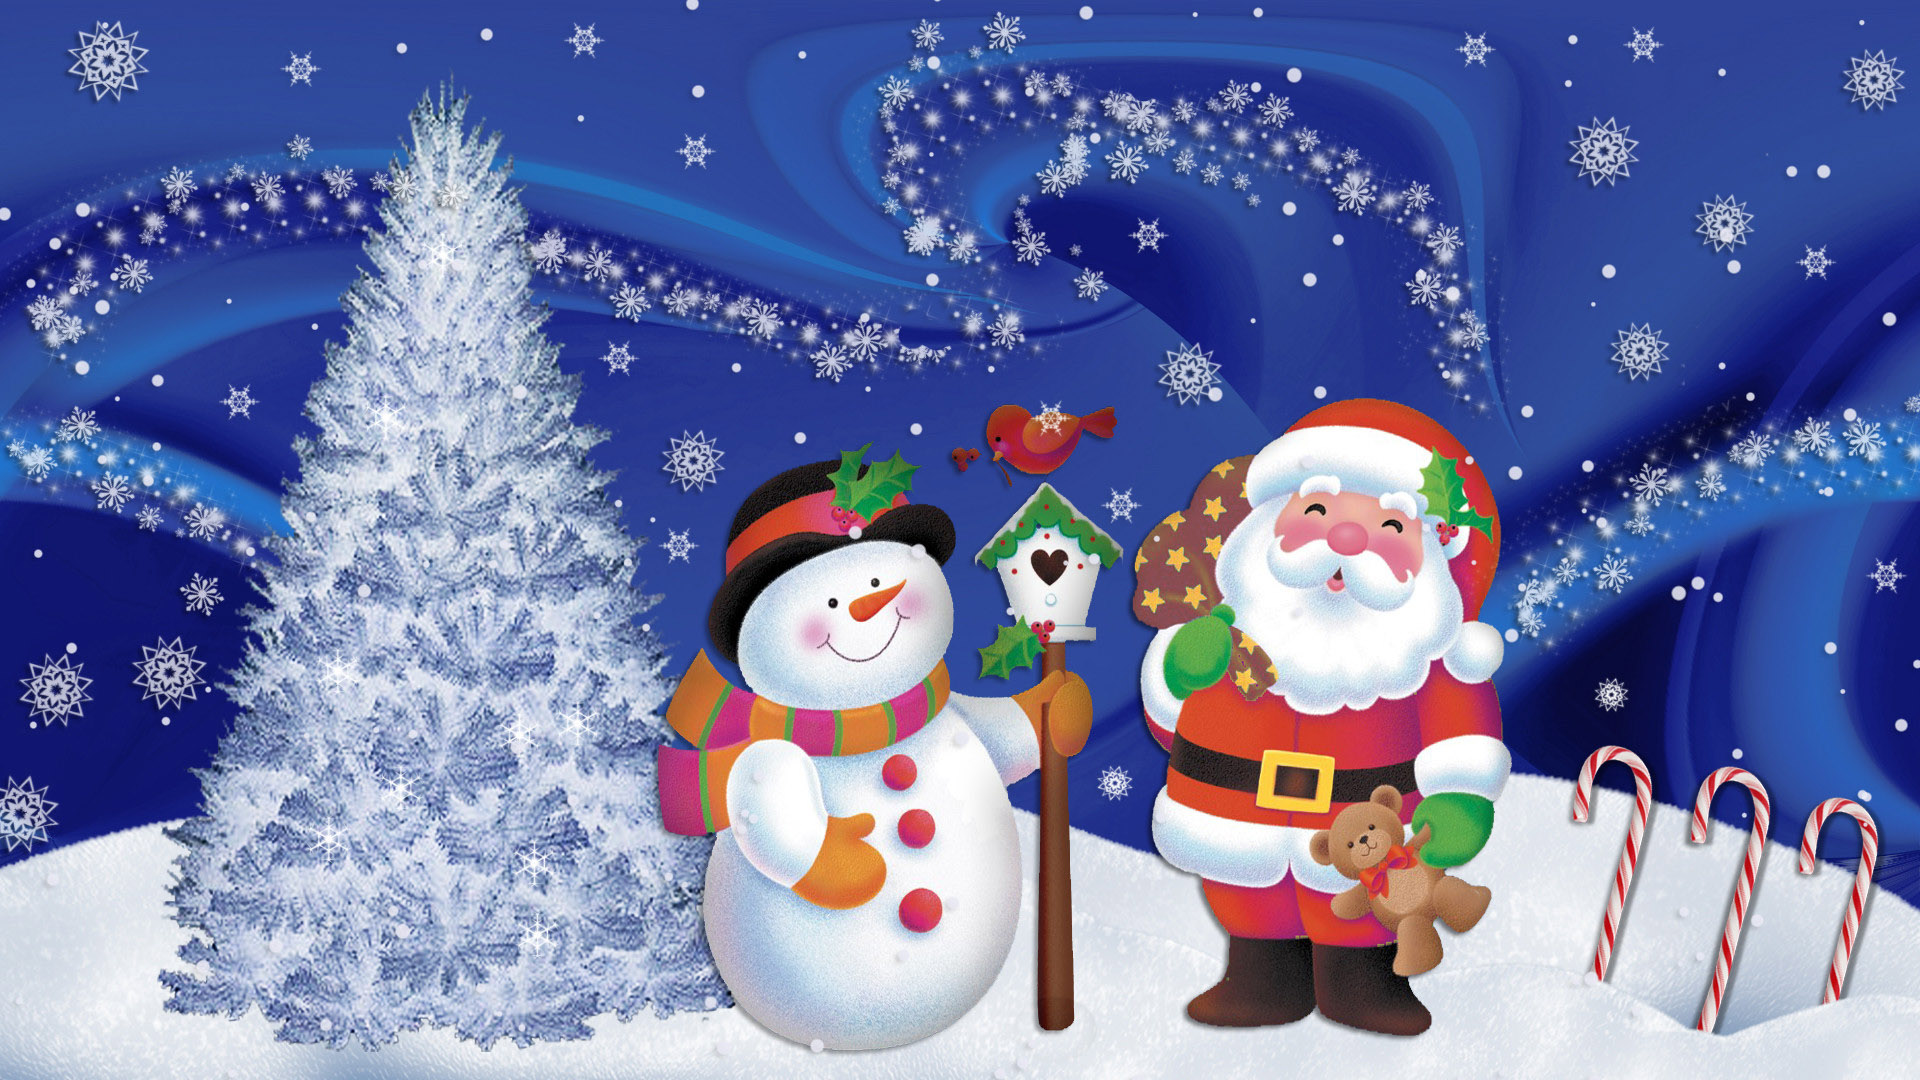 Snowman Santa Claus Wallpaper Download